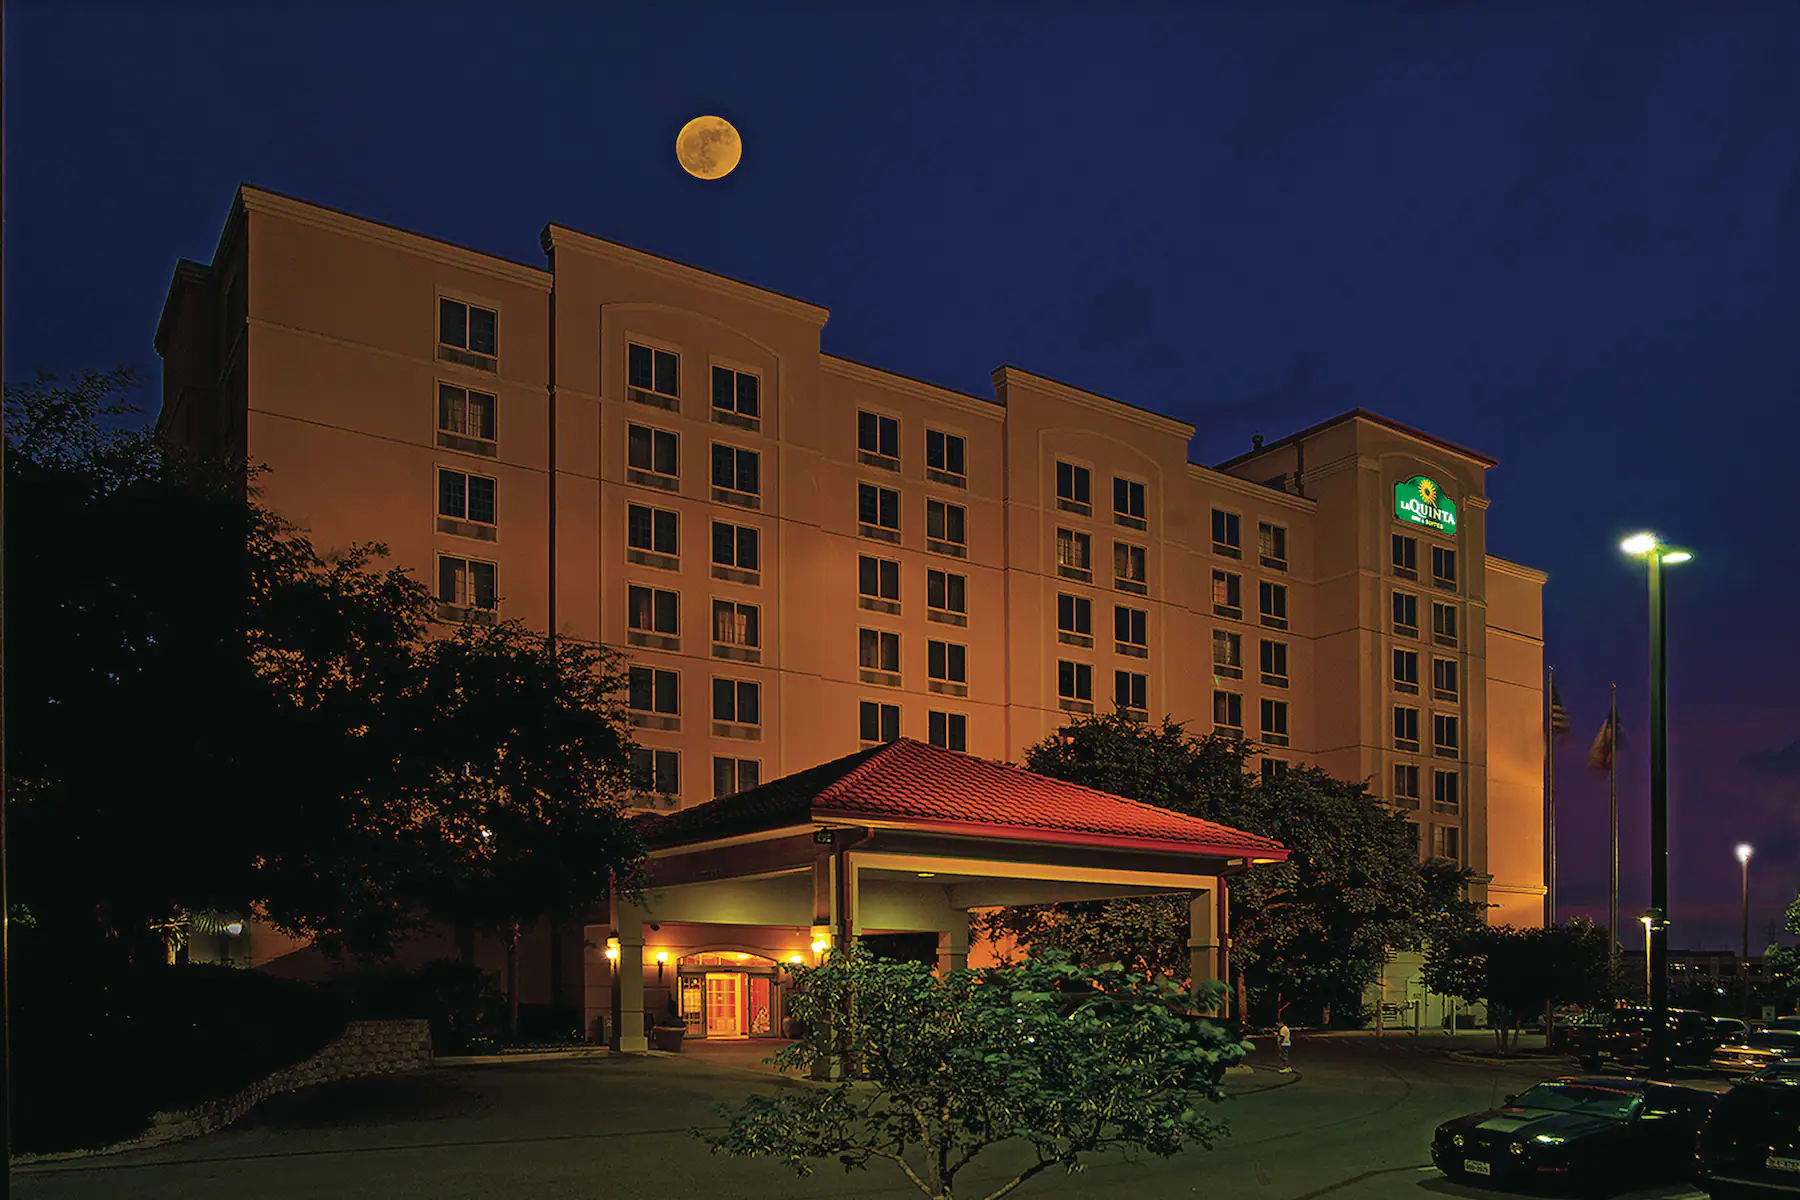 La Quinta Inn & Suites Medical Center NW / Conference & Event Center